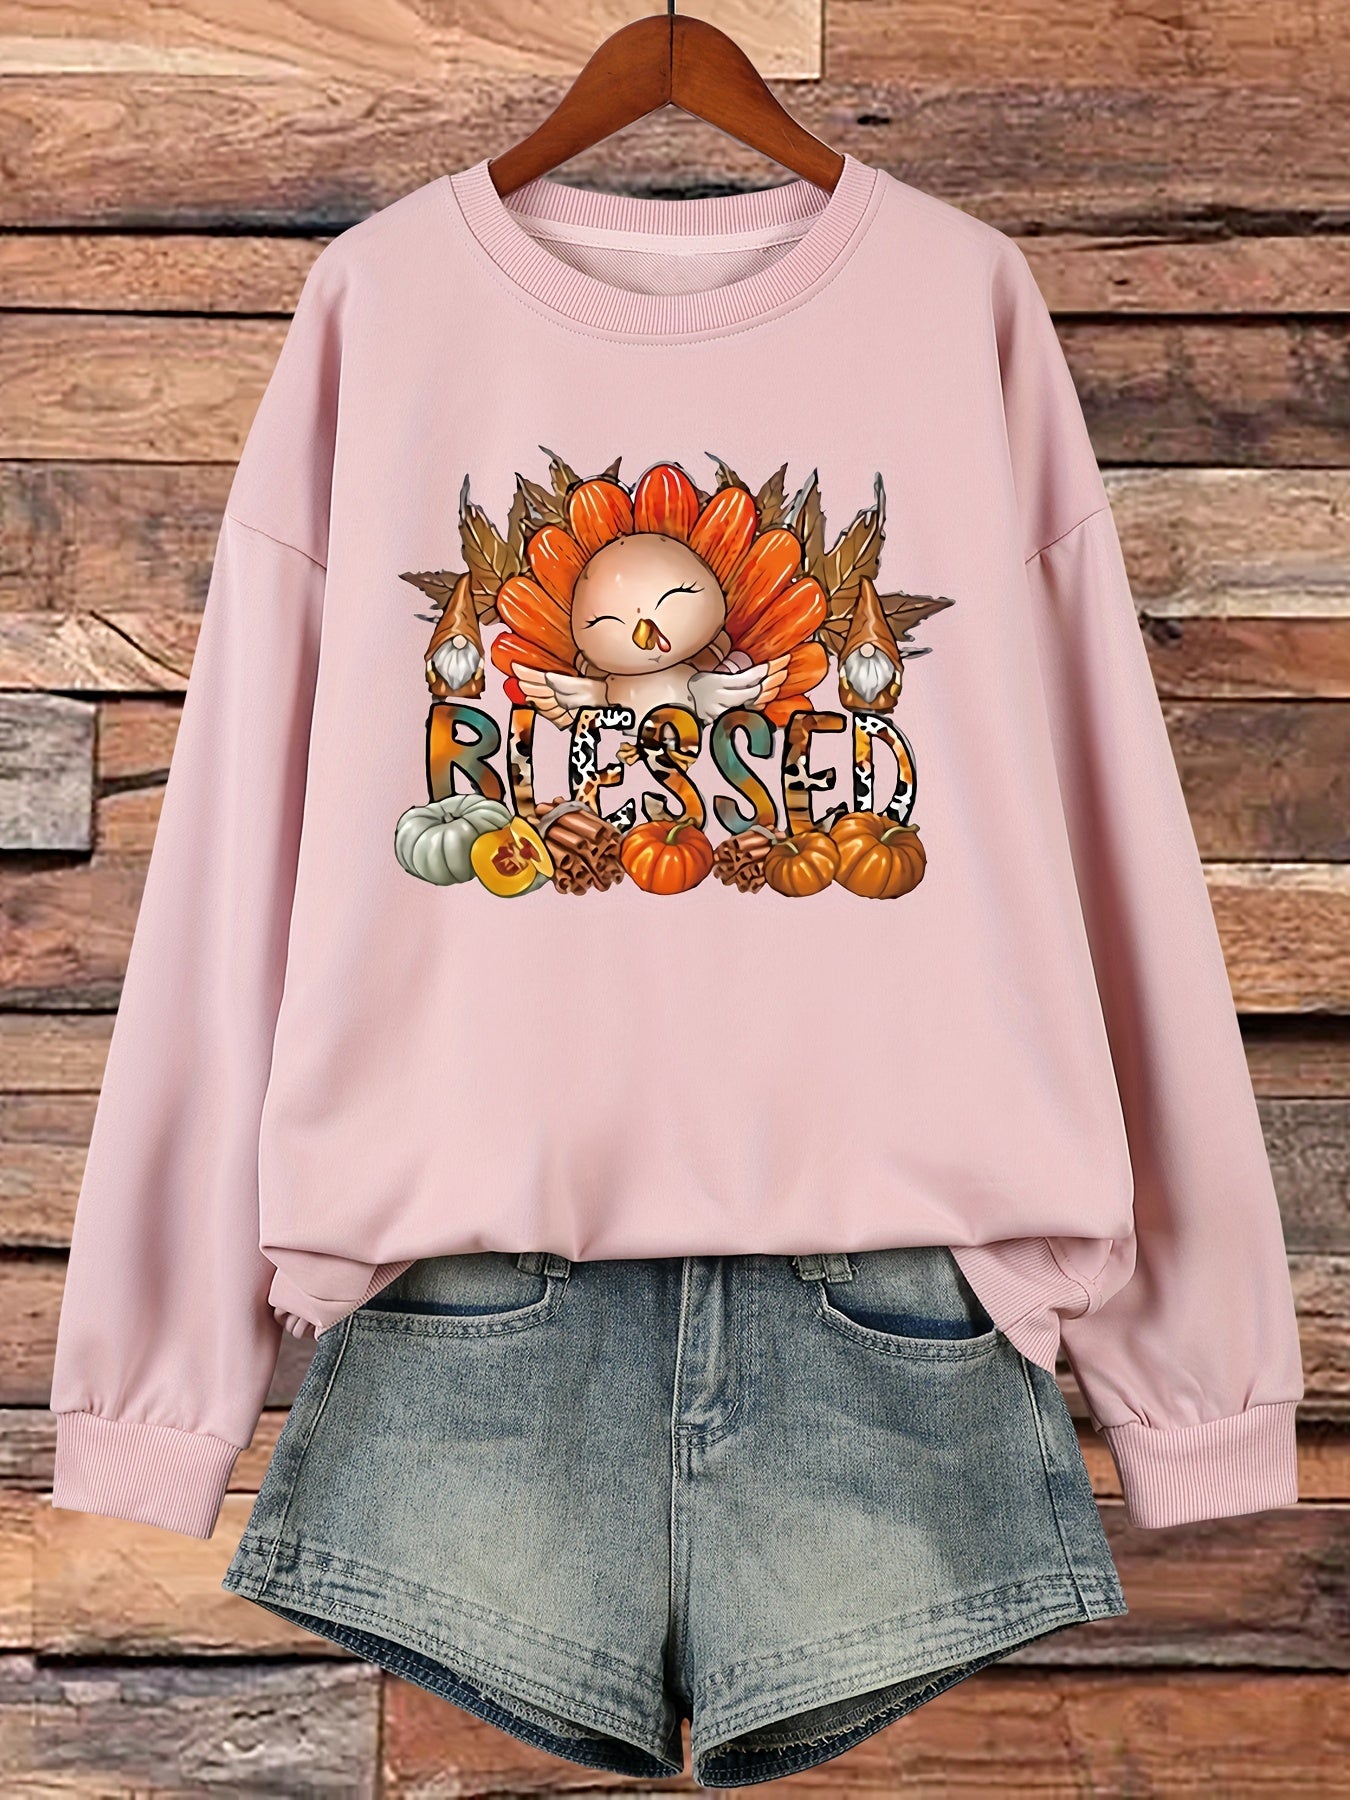 Blessed (Thanksgiving Themed) Plus Size Women's Christian Pullover Sweatshirt claimedbygoddesigns